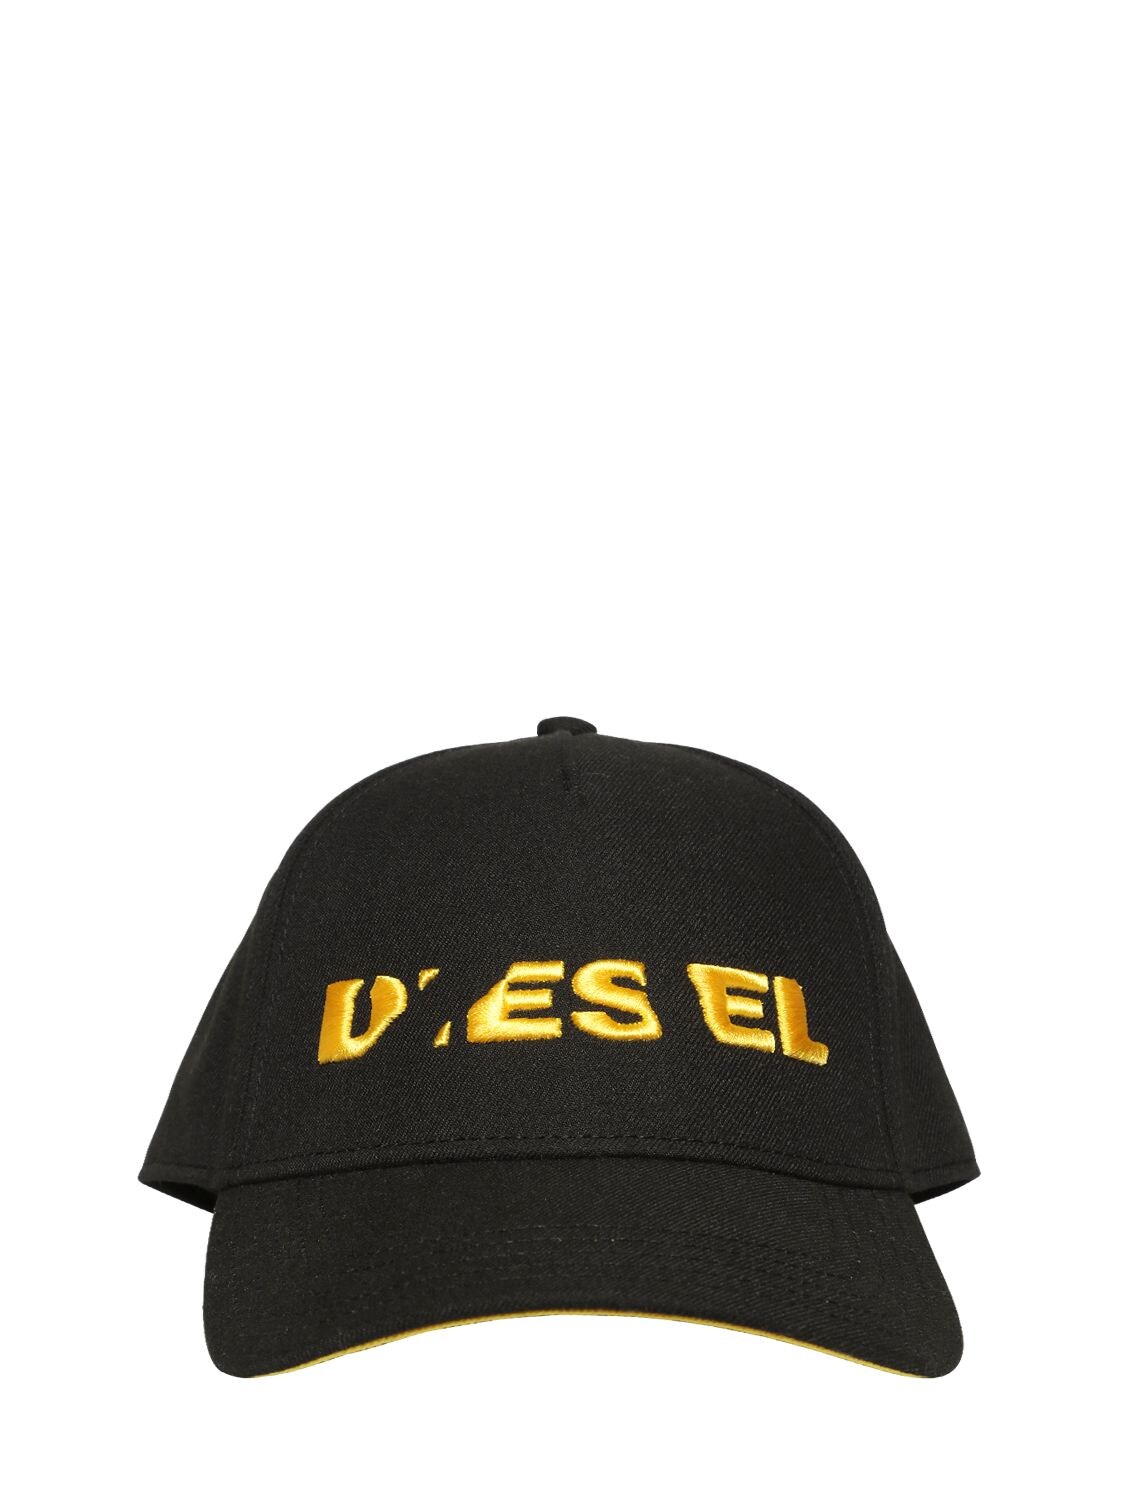 Diesel Broken Logo Twill Baseball Hat In Black/yellow